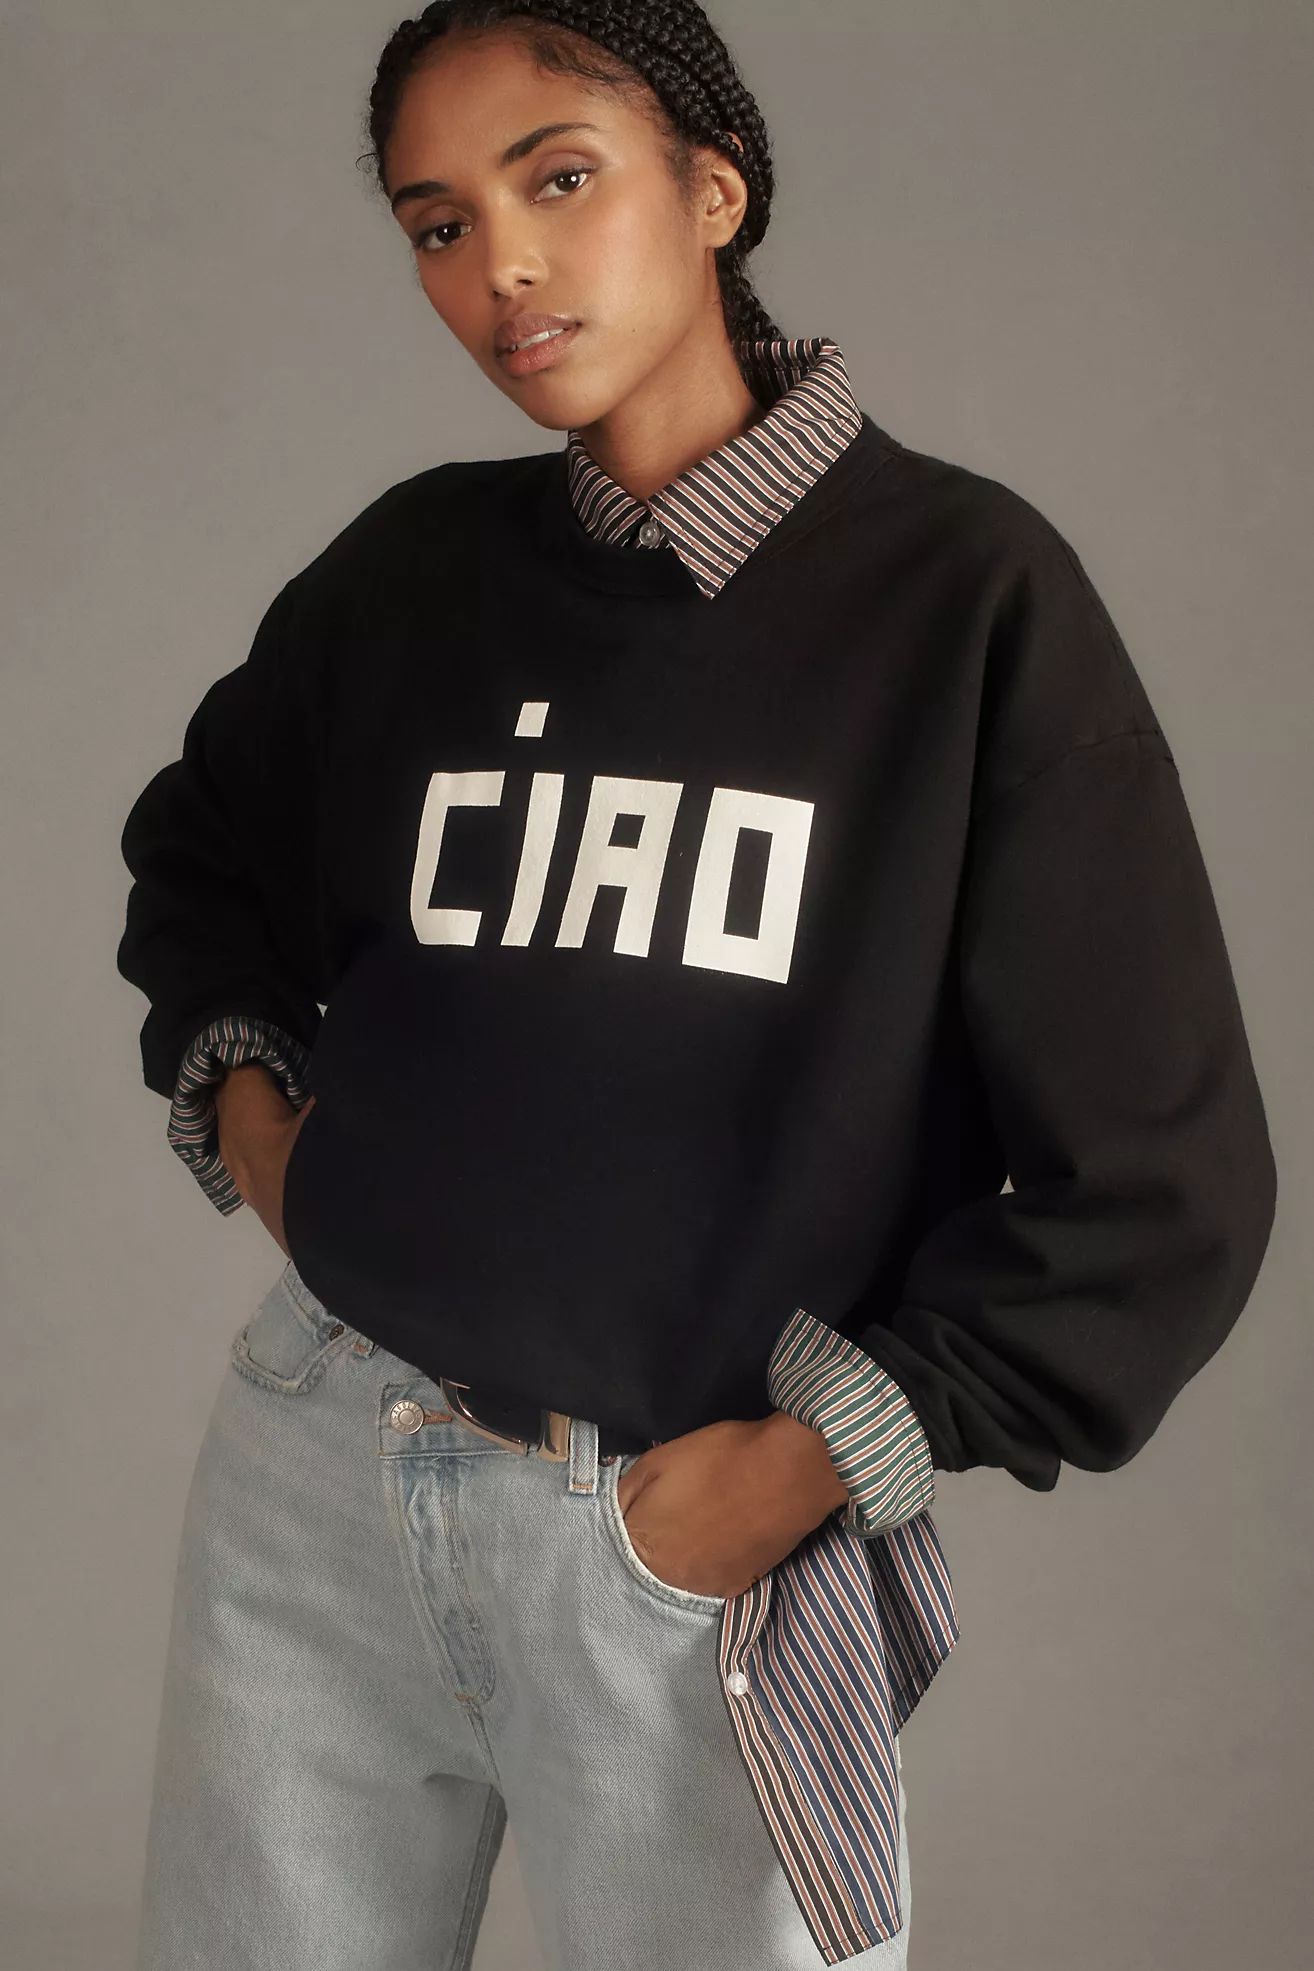 Clare V. Oversized Ciao Sweatshirt | Anthropologie (US)